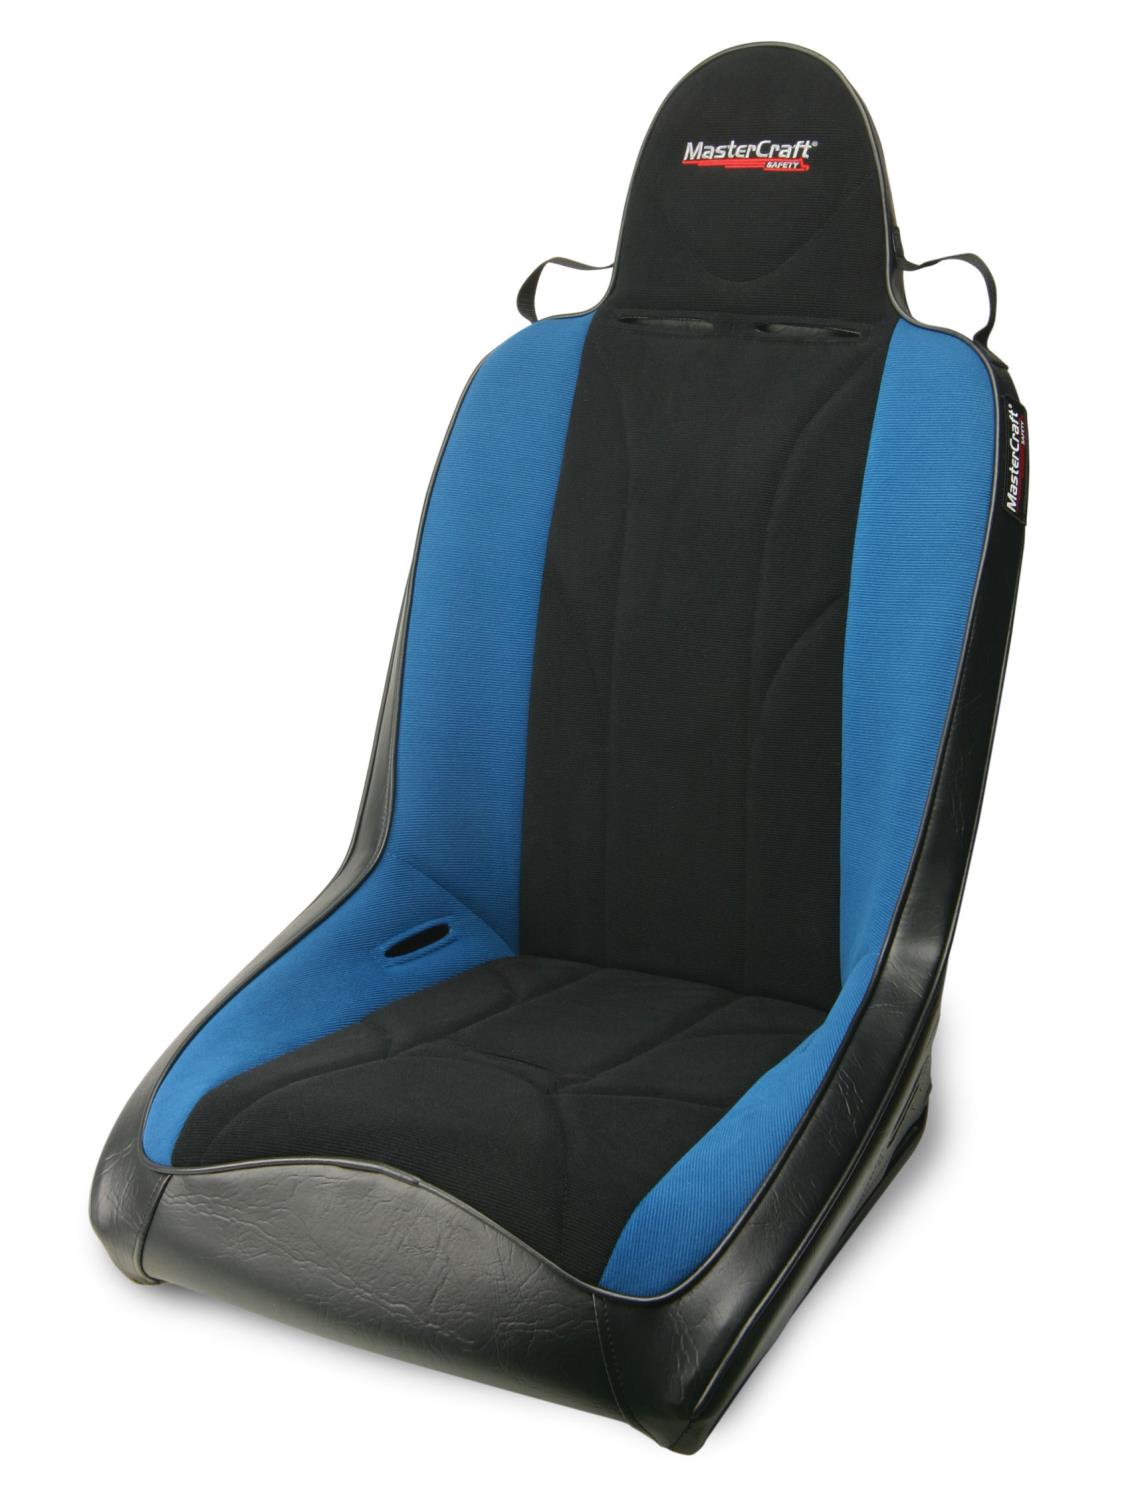 576213 Sportsman w/Fixed Headrest, Black w/Black Center & Blue Side Panels w/BRS Stitch Pattern